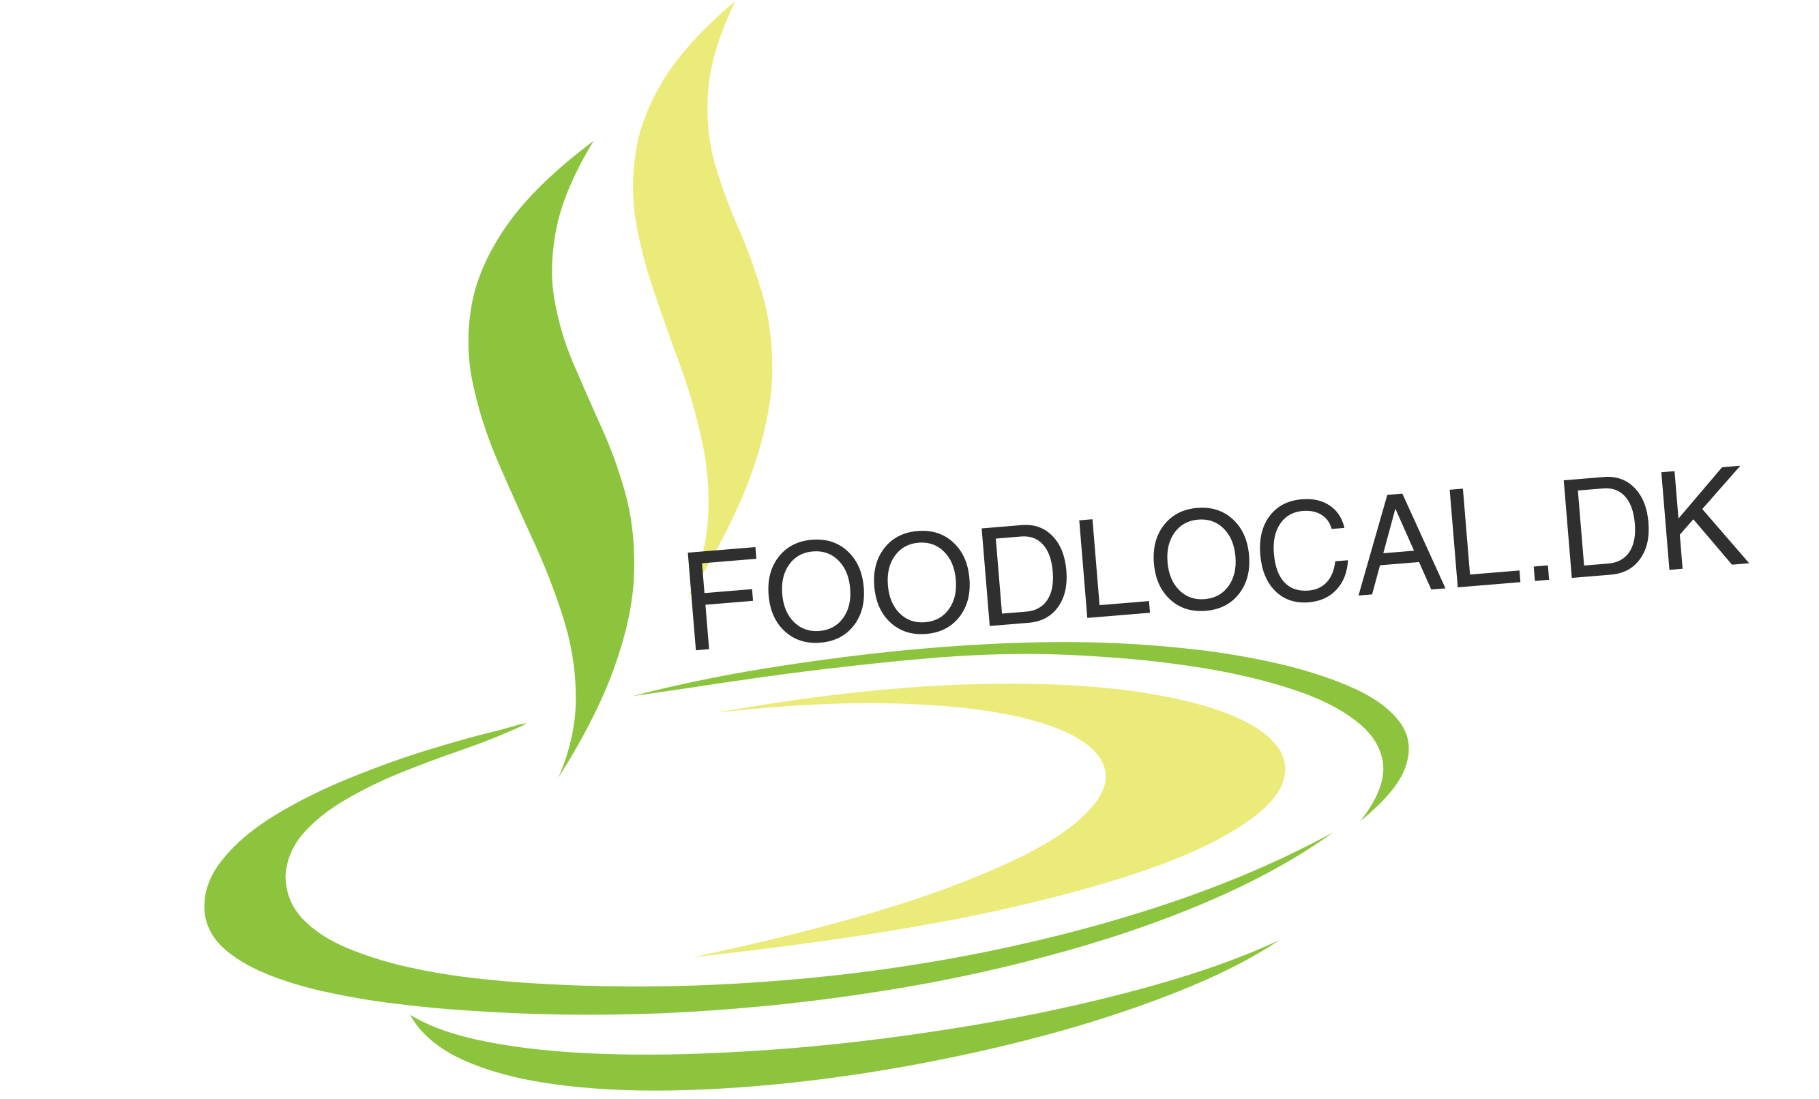 Foodlocal.dk